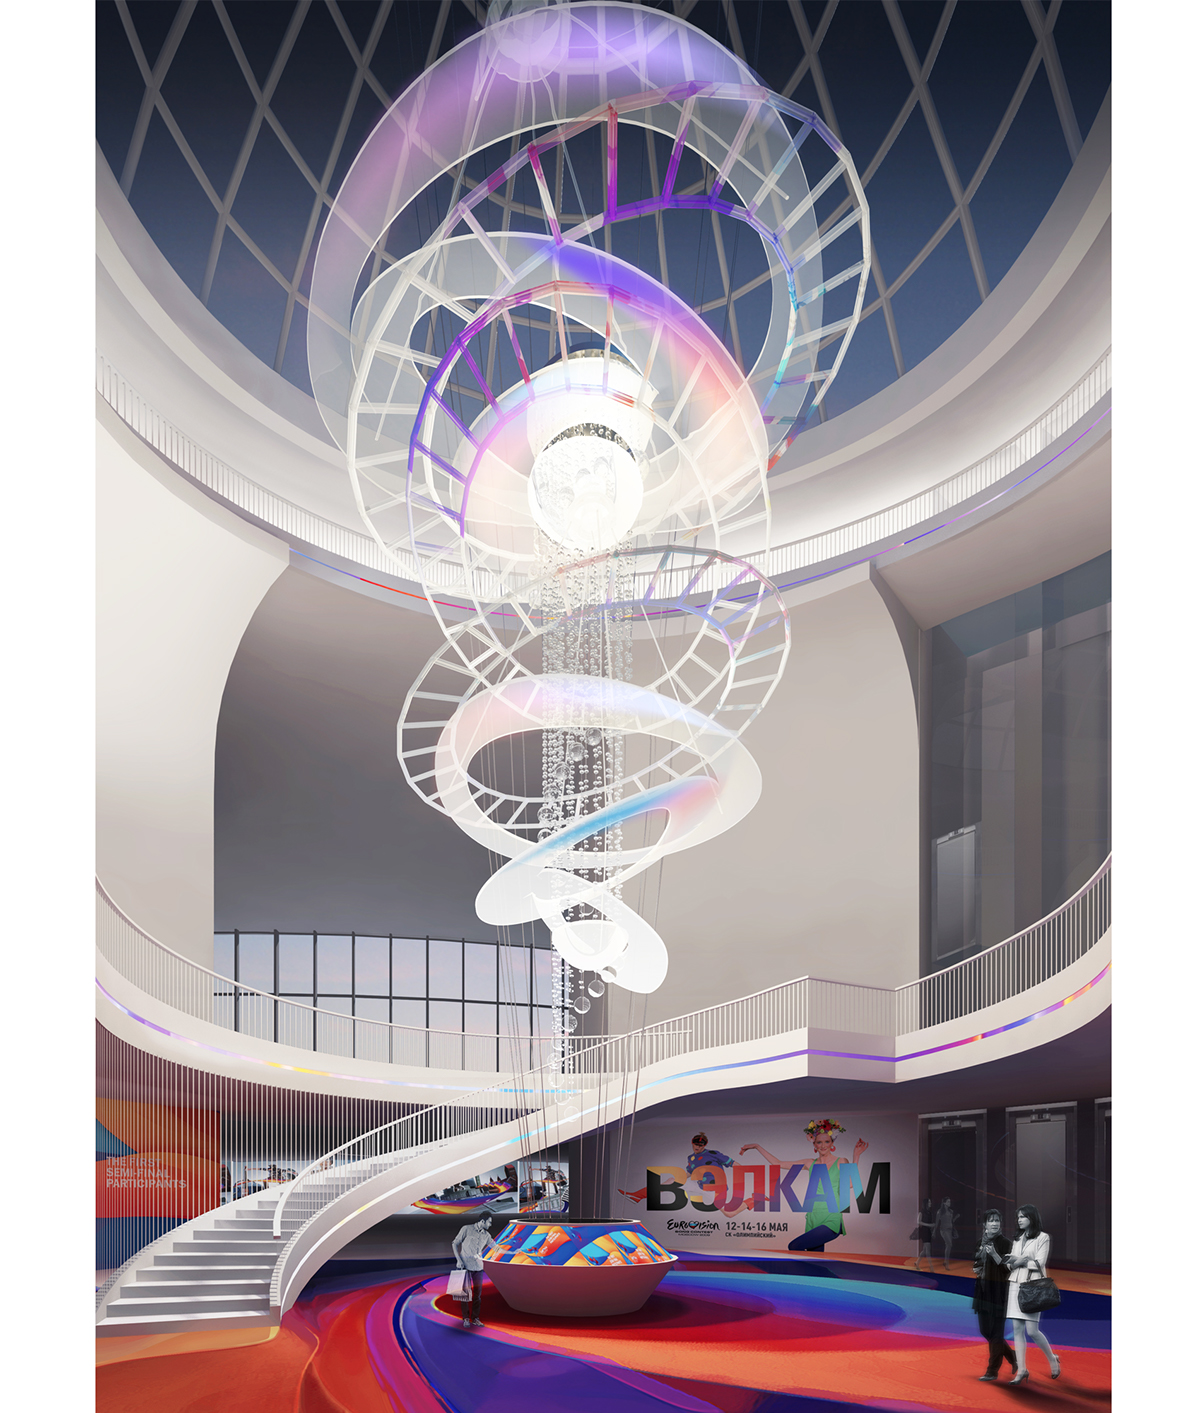 #entertainment #cultural #center #architecture #interiror #design #white #red #blue #purple #color #atrium #foyer #amphitheater #restaurant #exhibition #concerthall